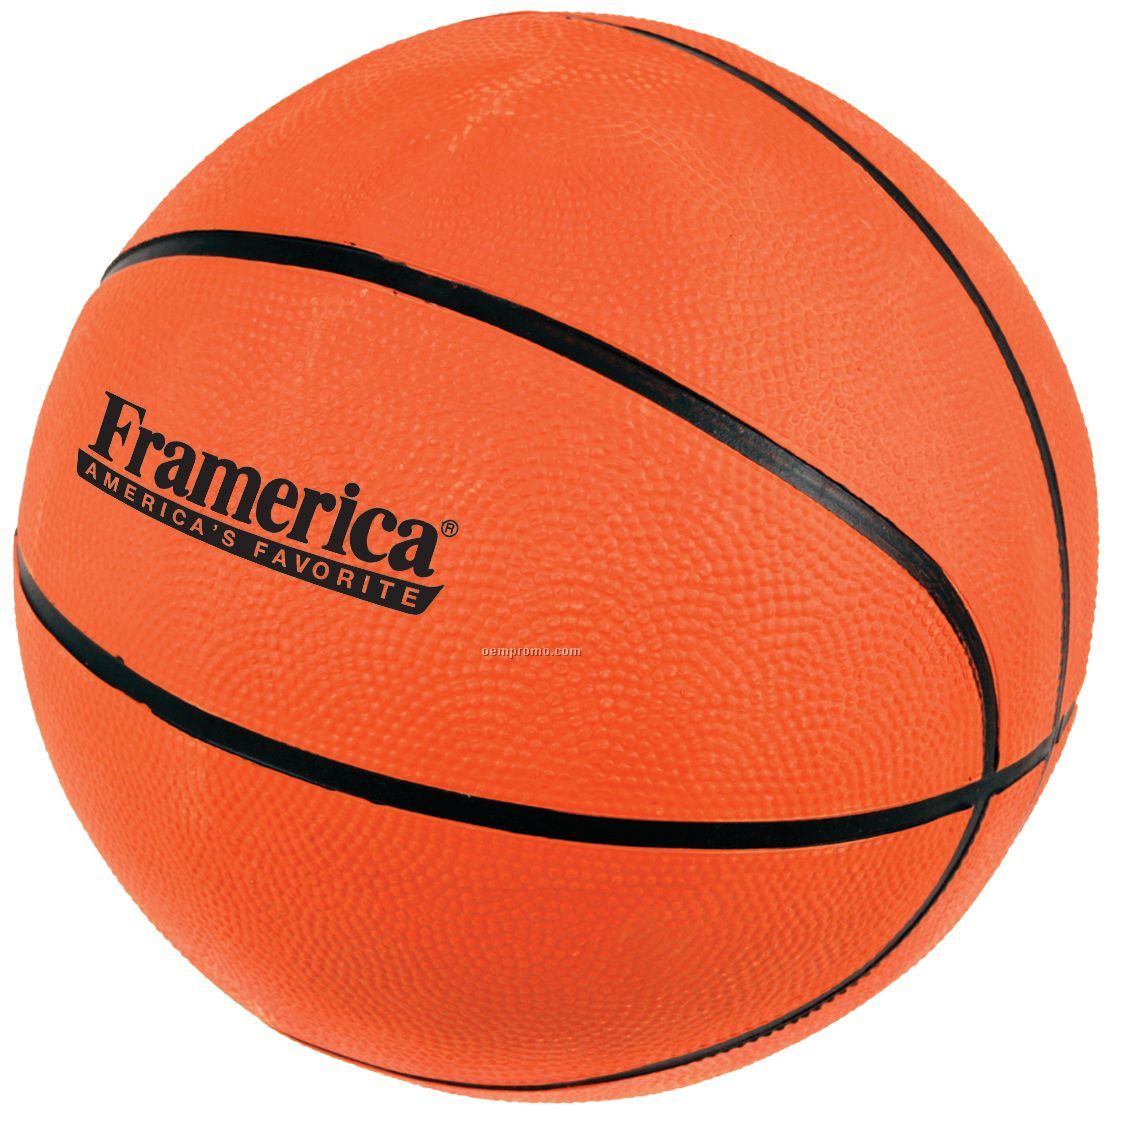 Regulation Size Basketball